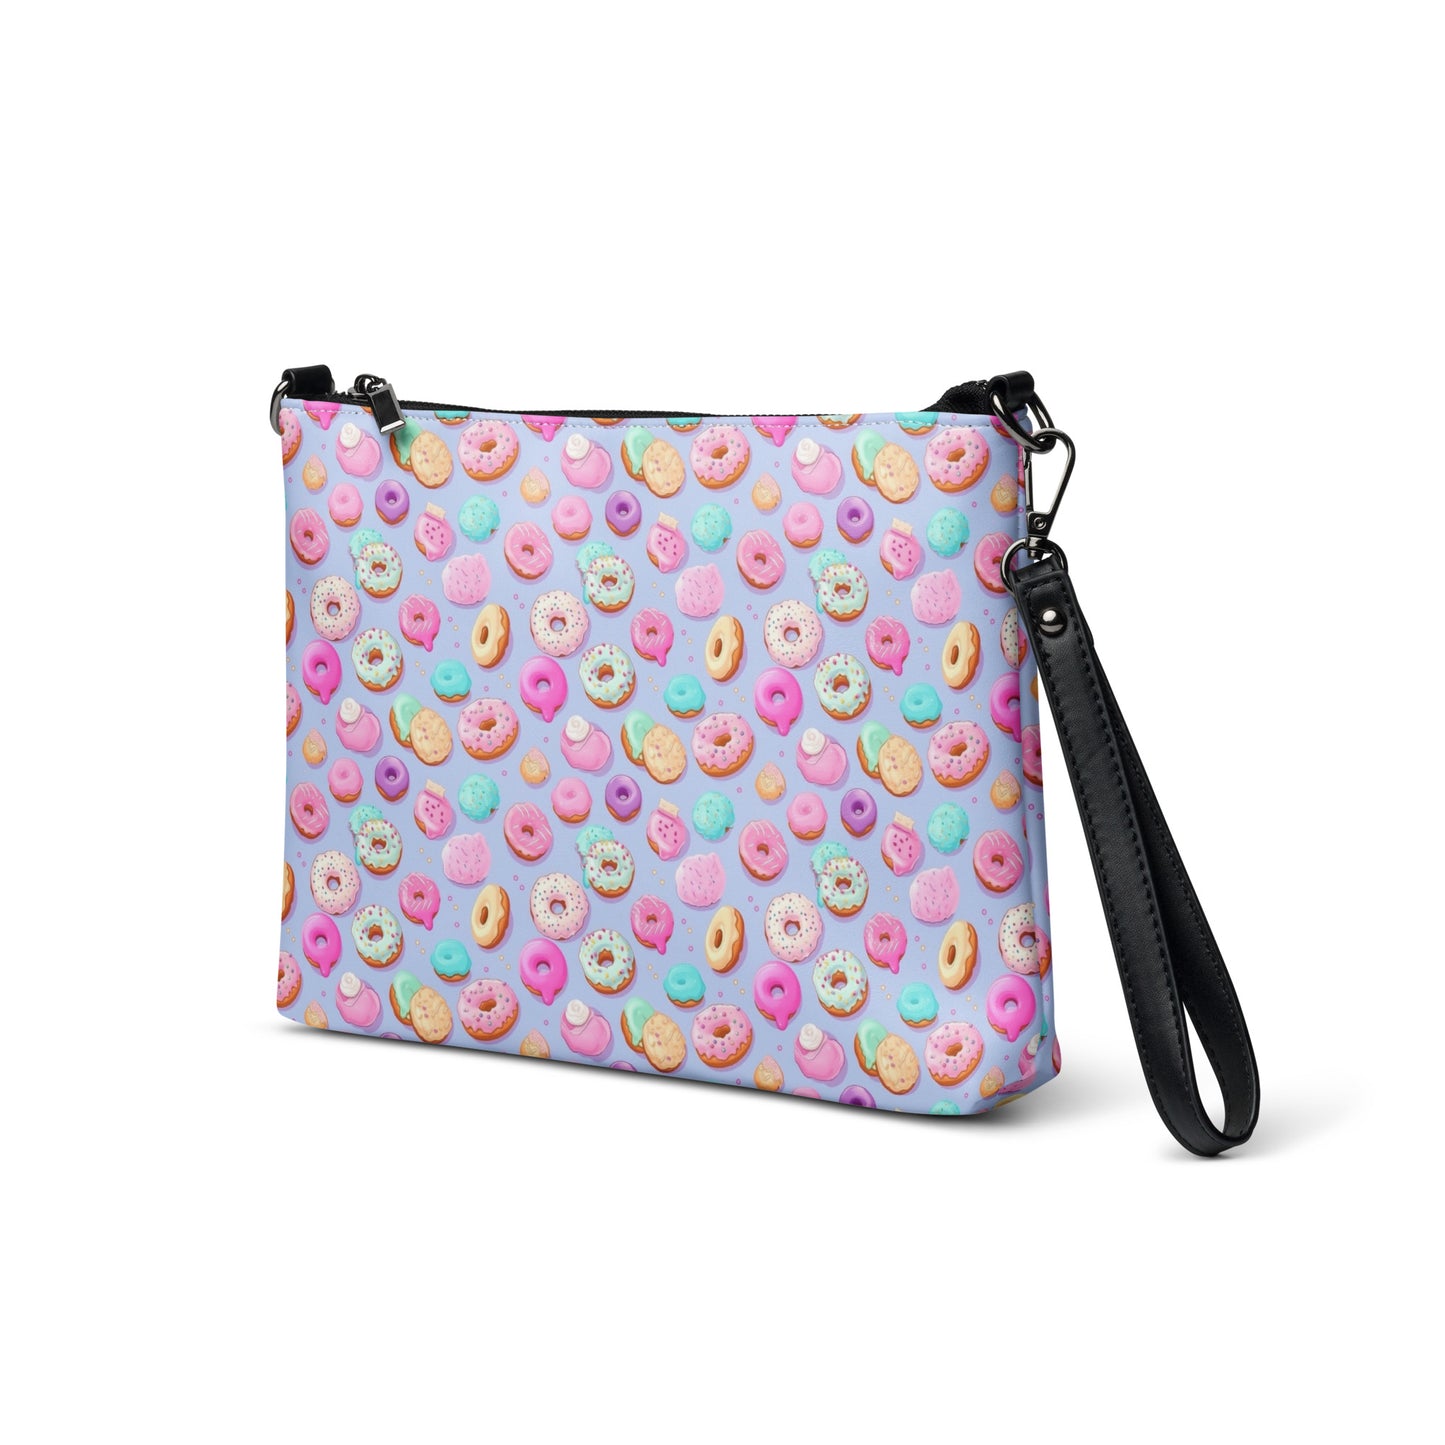 Donita Crossbody Bags For Women Trendy, Handbag Wallet Set With 2 Adjustable Strap